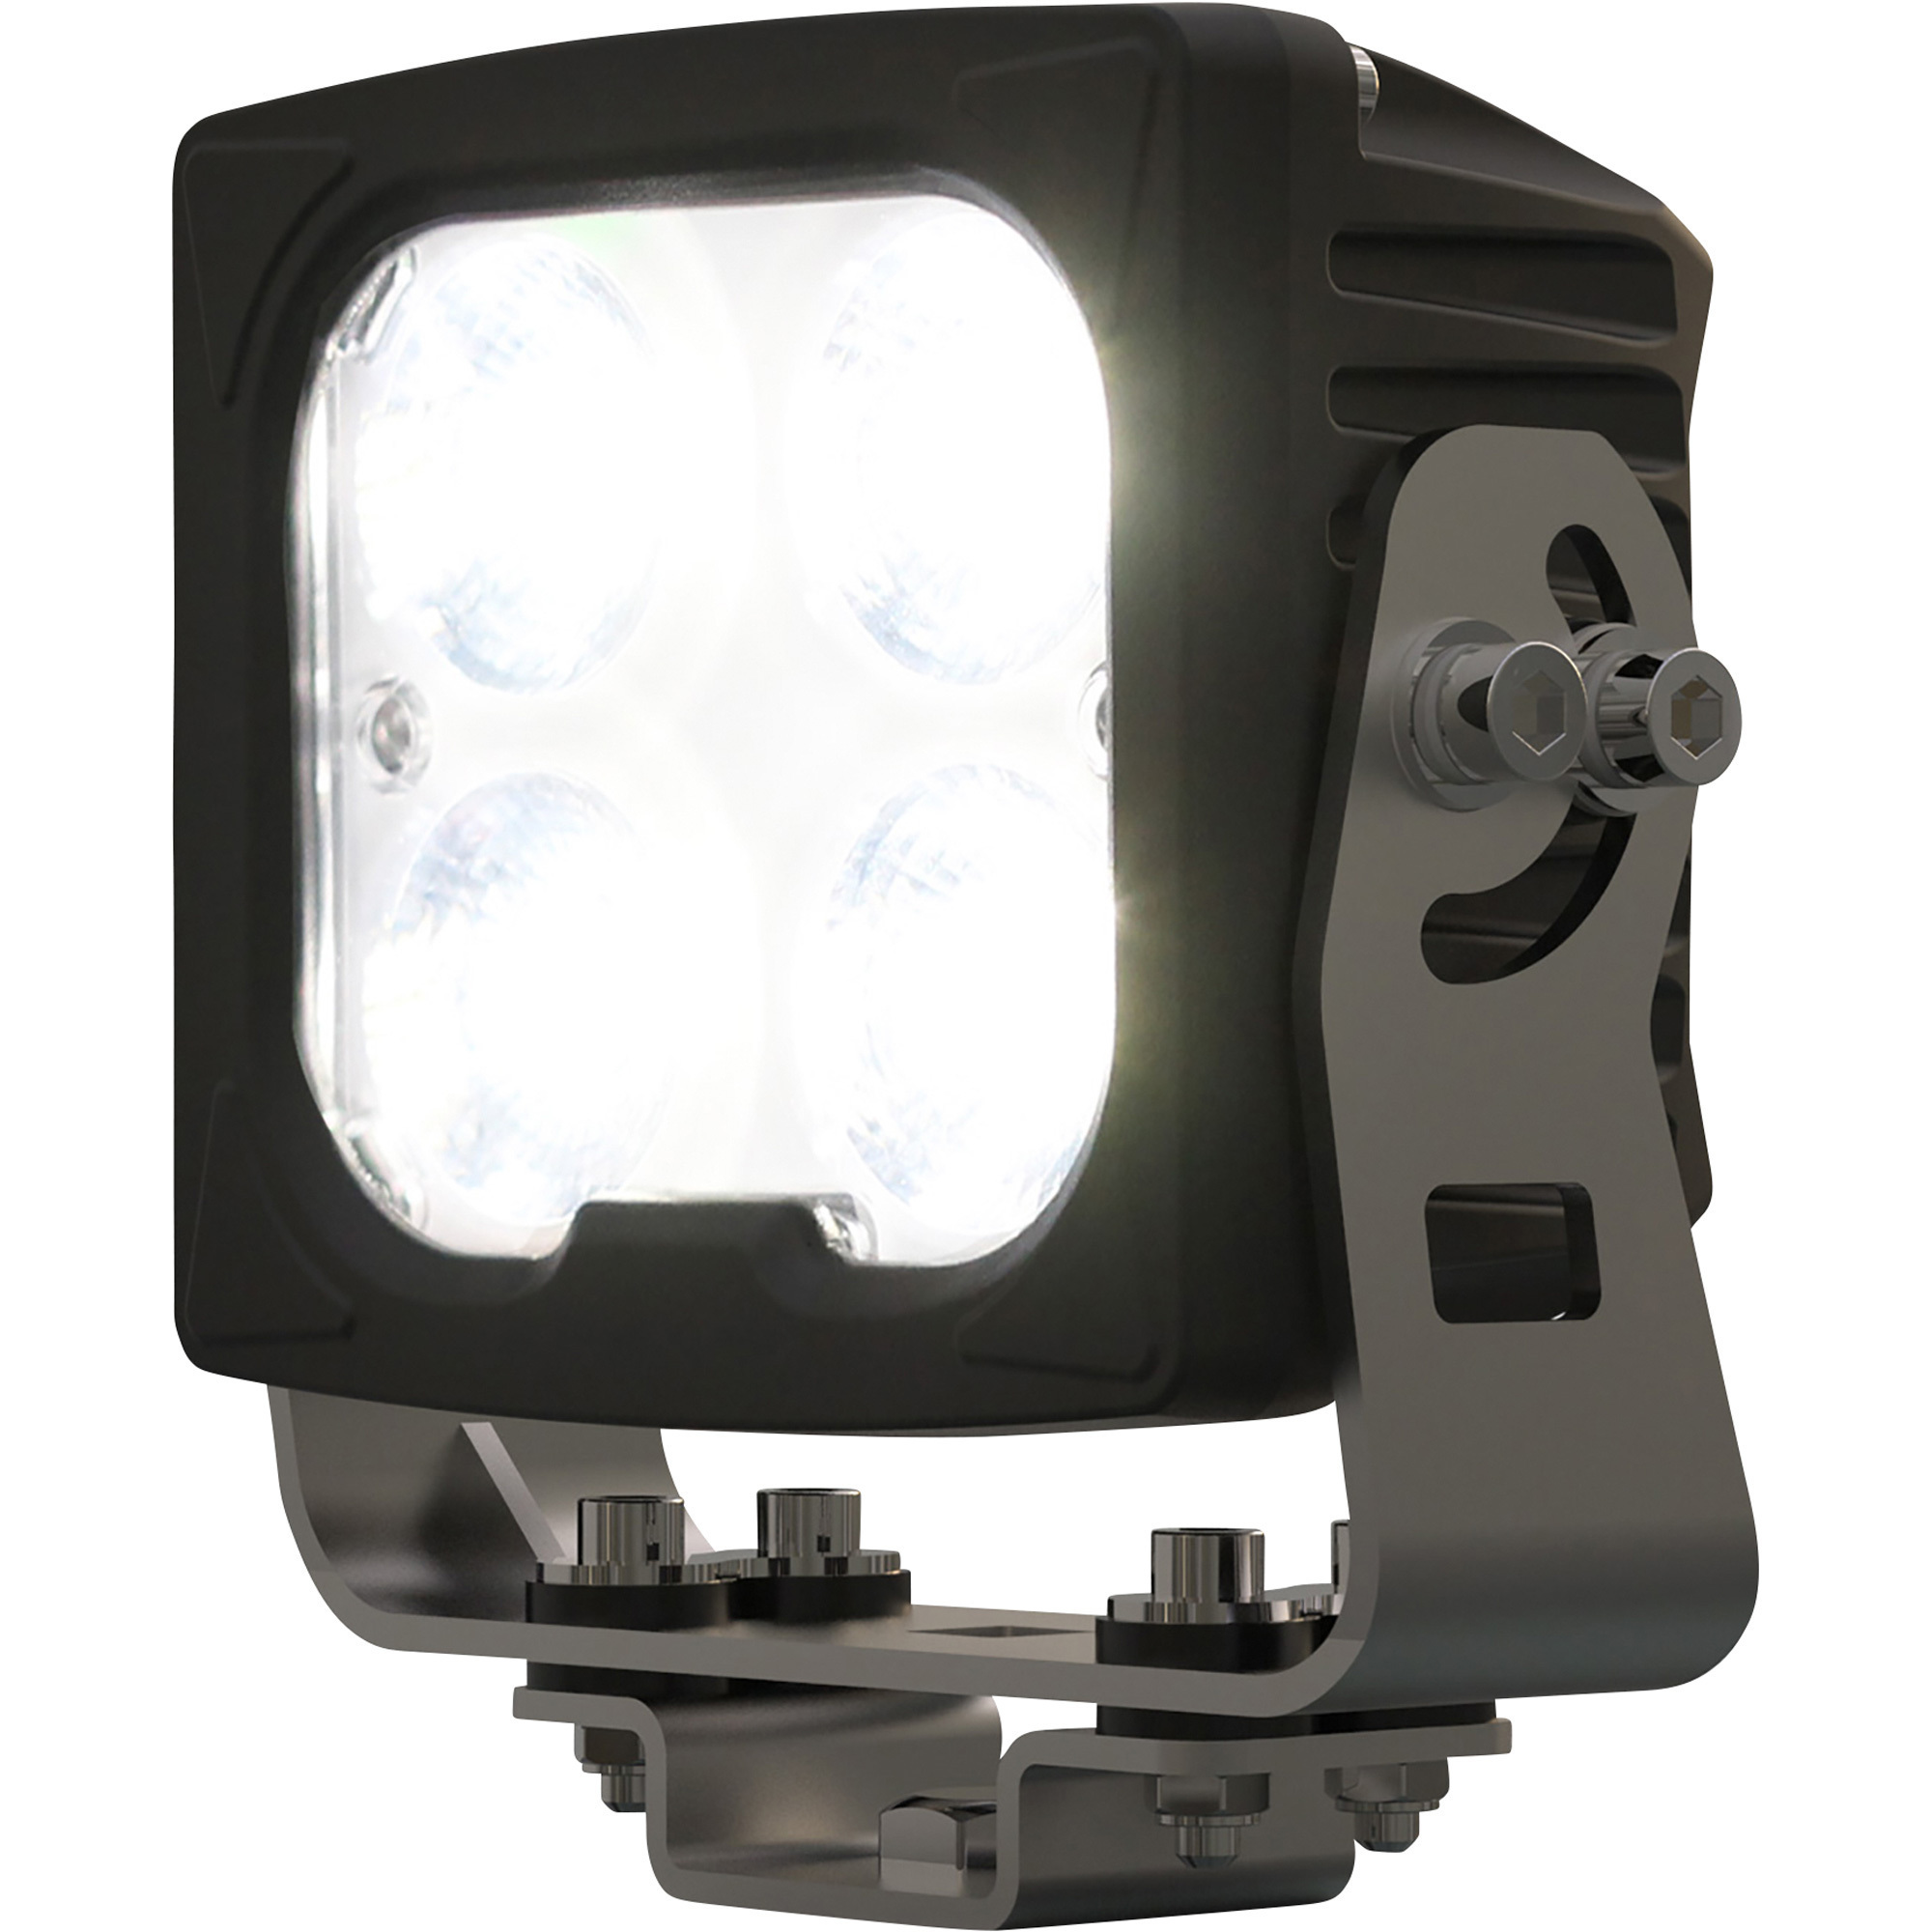 ECCO LED Worklight, Model EW4020